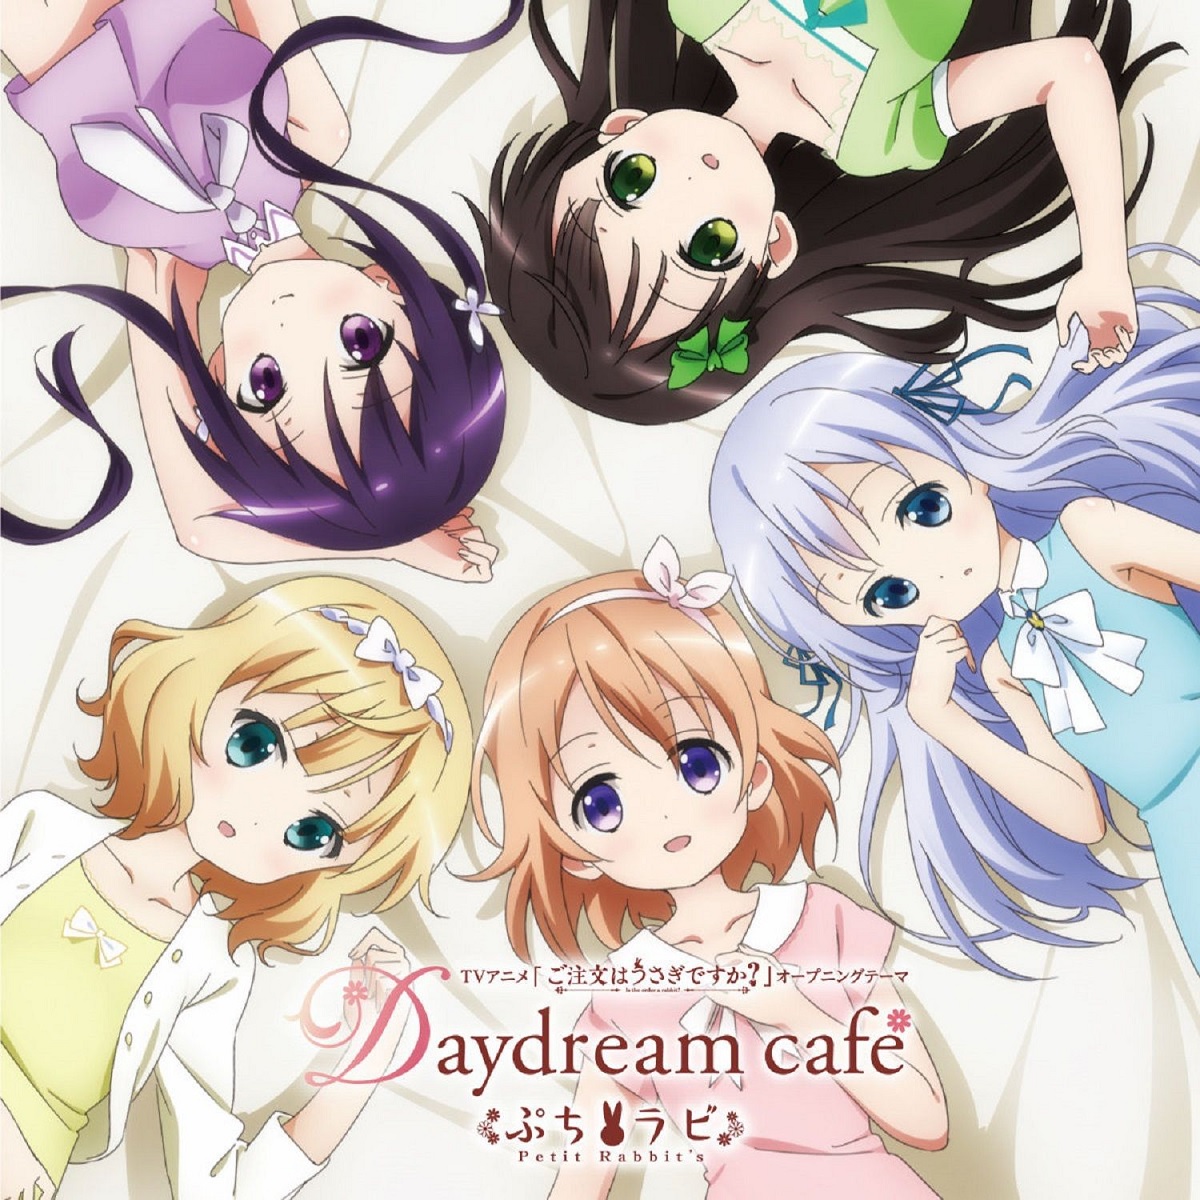 『Petit Rabbit's - Daydream café』収録の『Daydream café』ジャケット